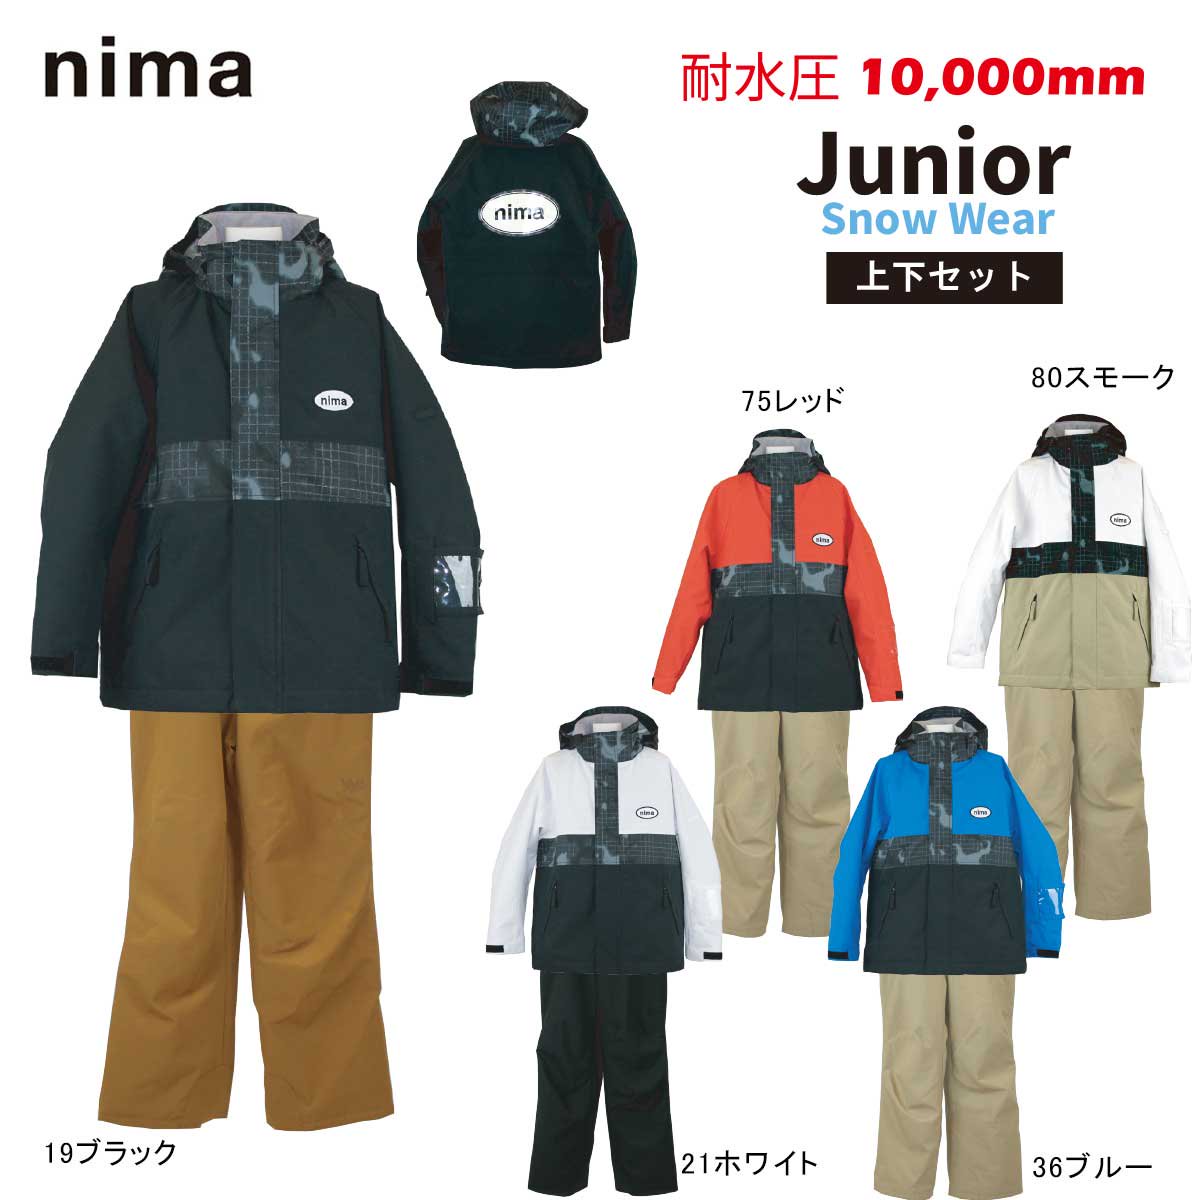 nima(ニーマ) JR-1305 ジュニア スノーウェア スキーウェア 上下セット ...